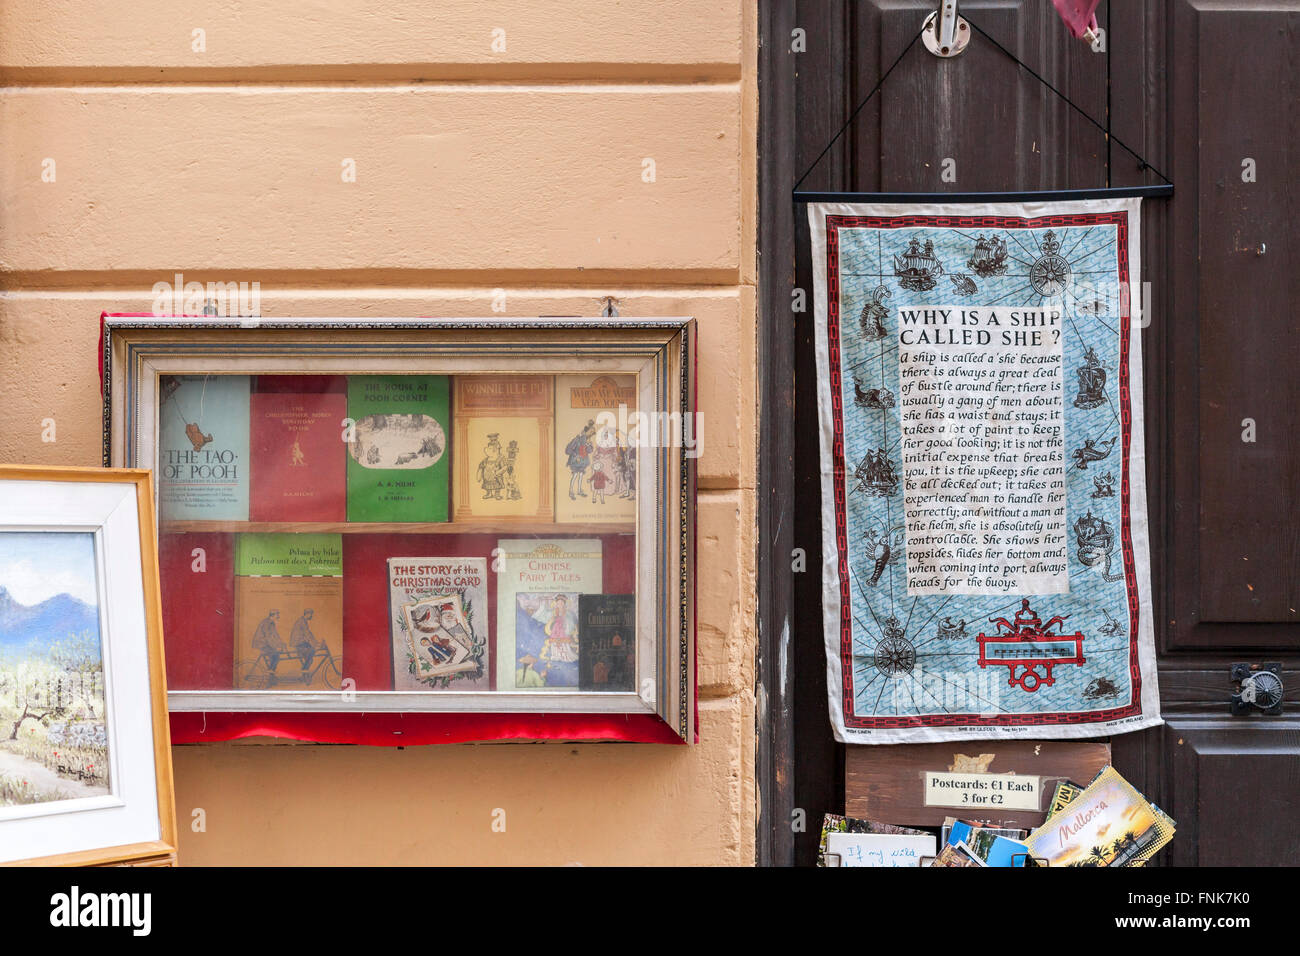 Display book store libri in inglese.Palma de Maiorca, isole Baleari, Spagna. Foto Stock